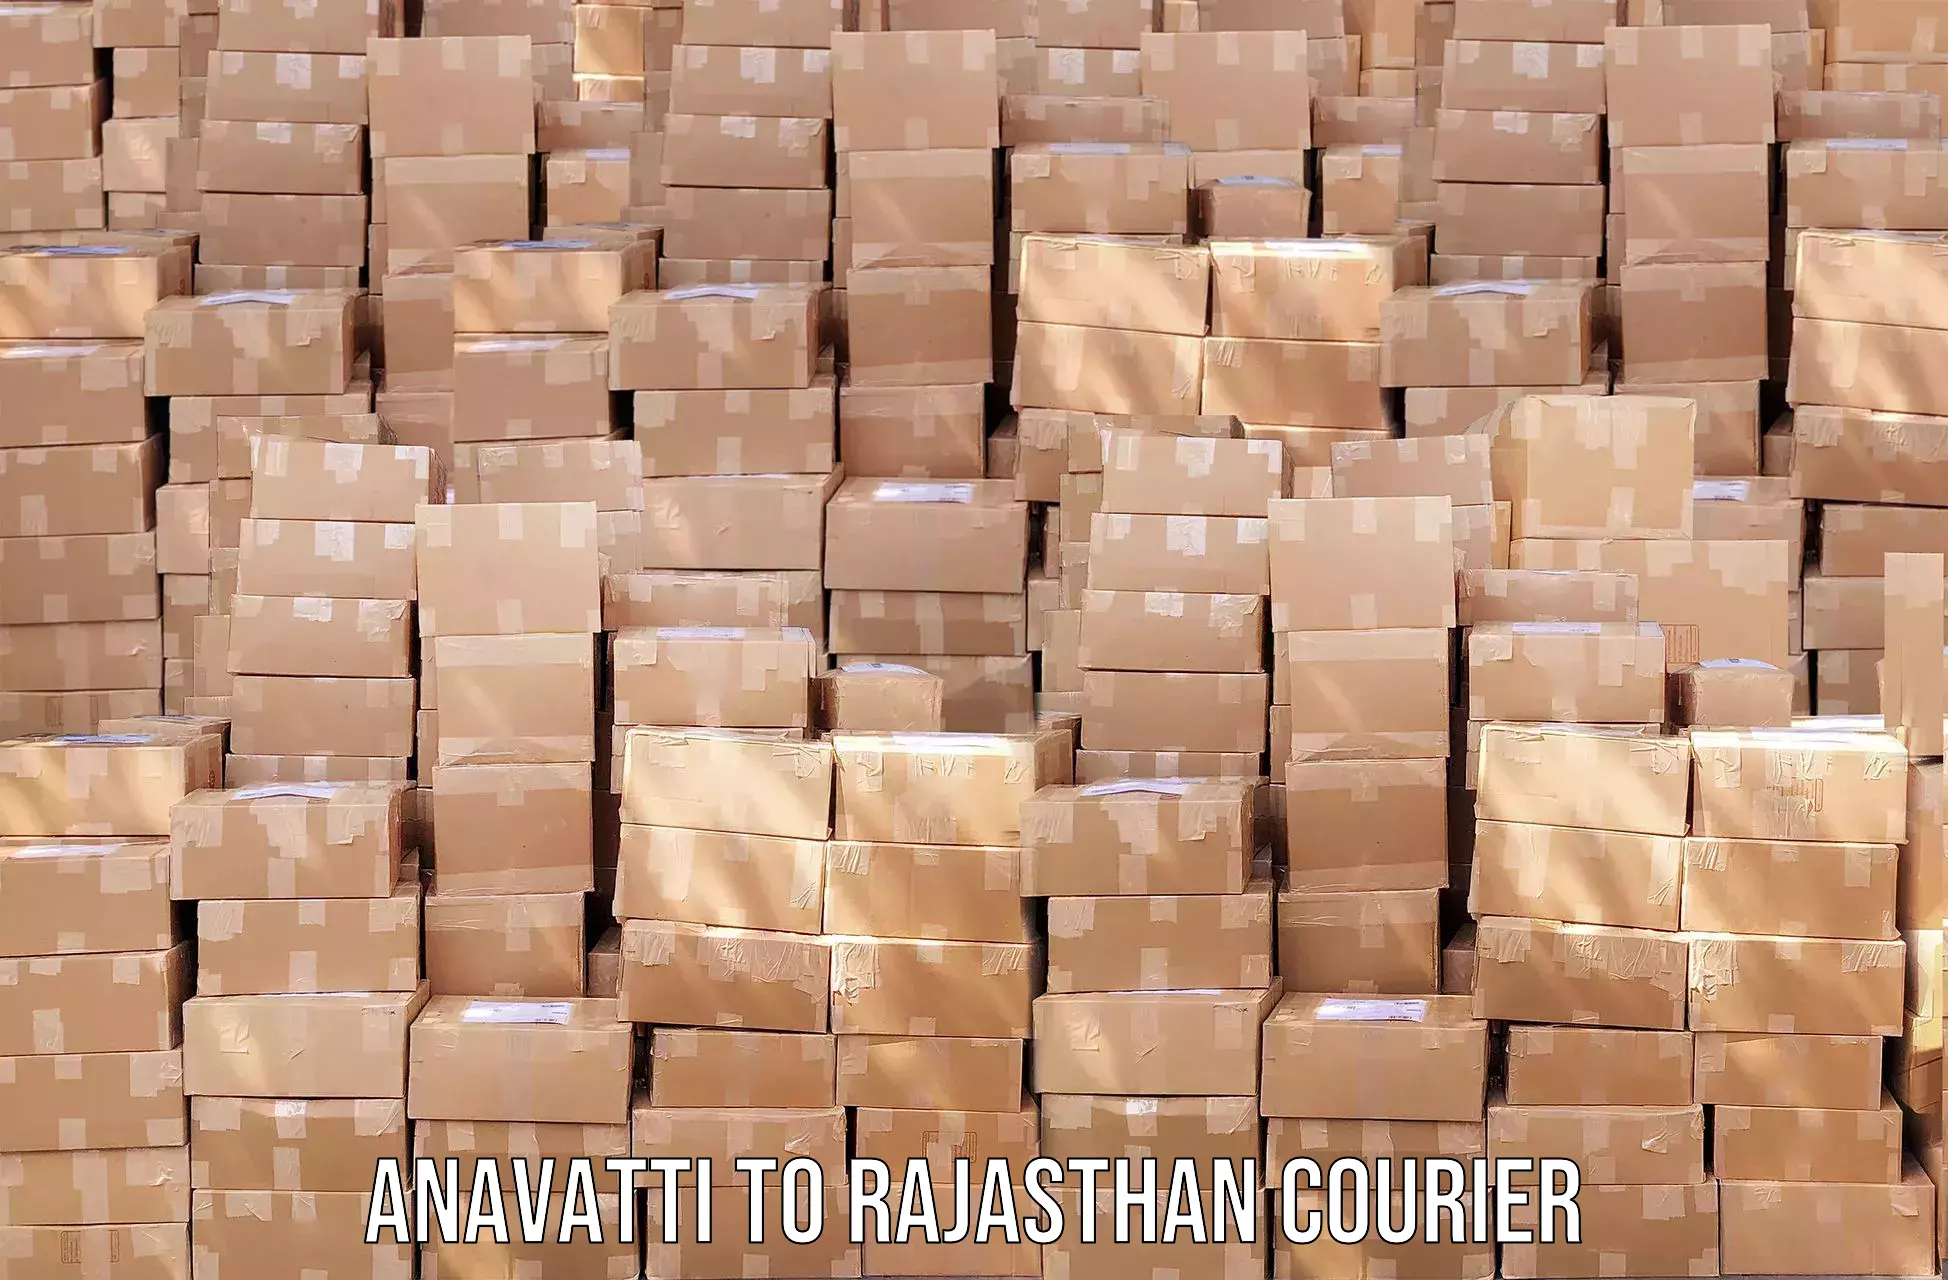 Digital courier platforms Anavatti to Pali